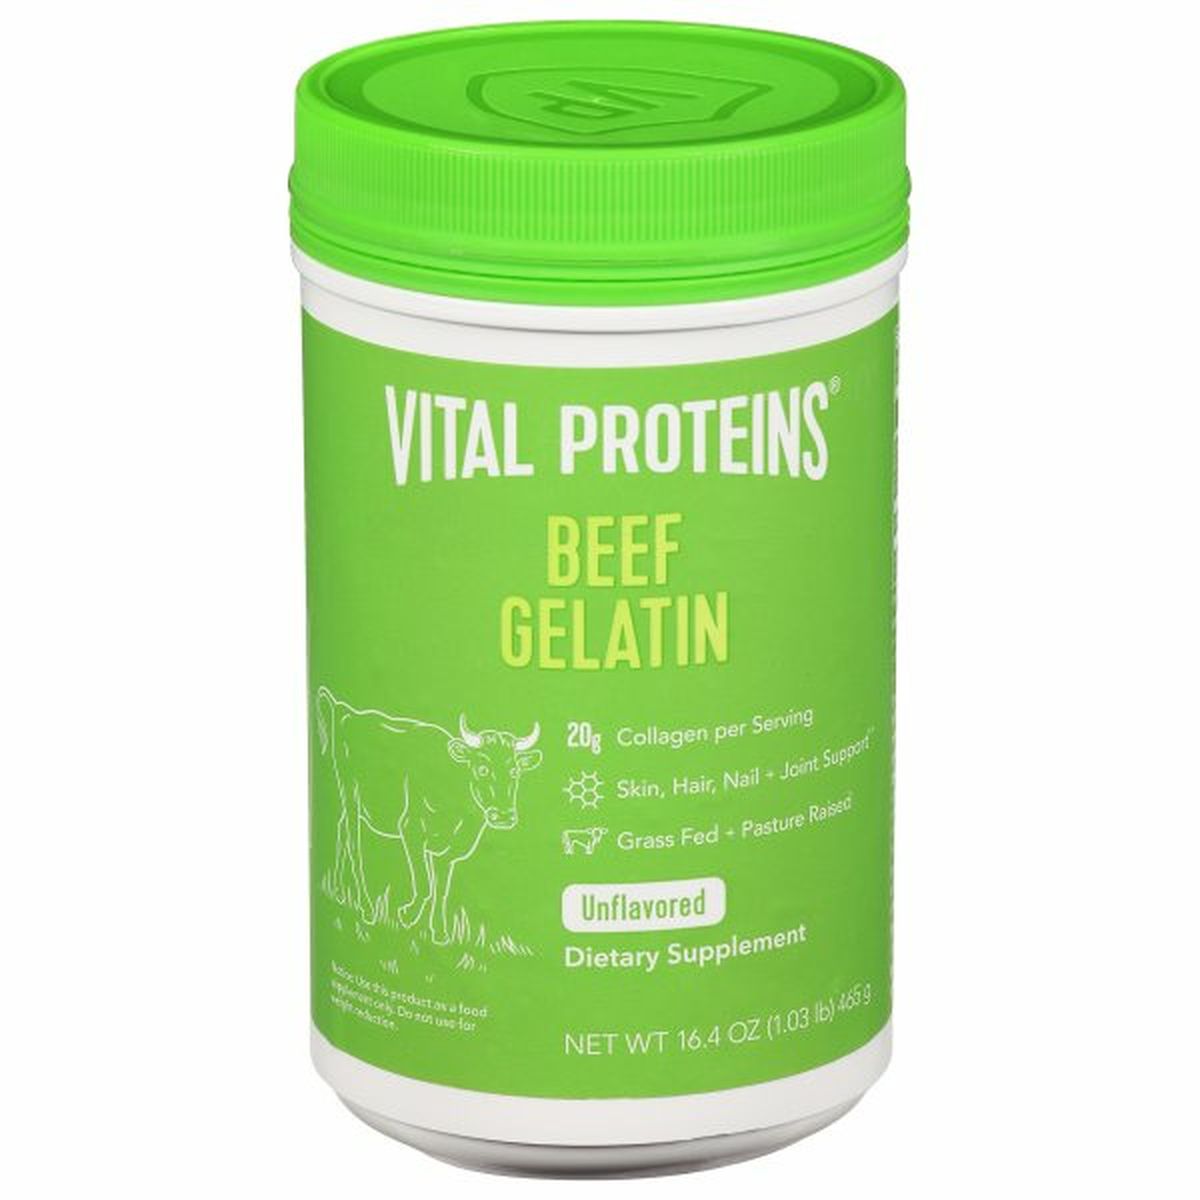 Calories in Vital Proteins Beef Gelatin, Unflavored